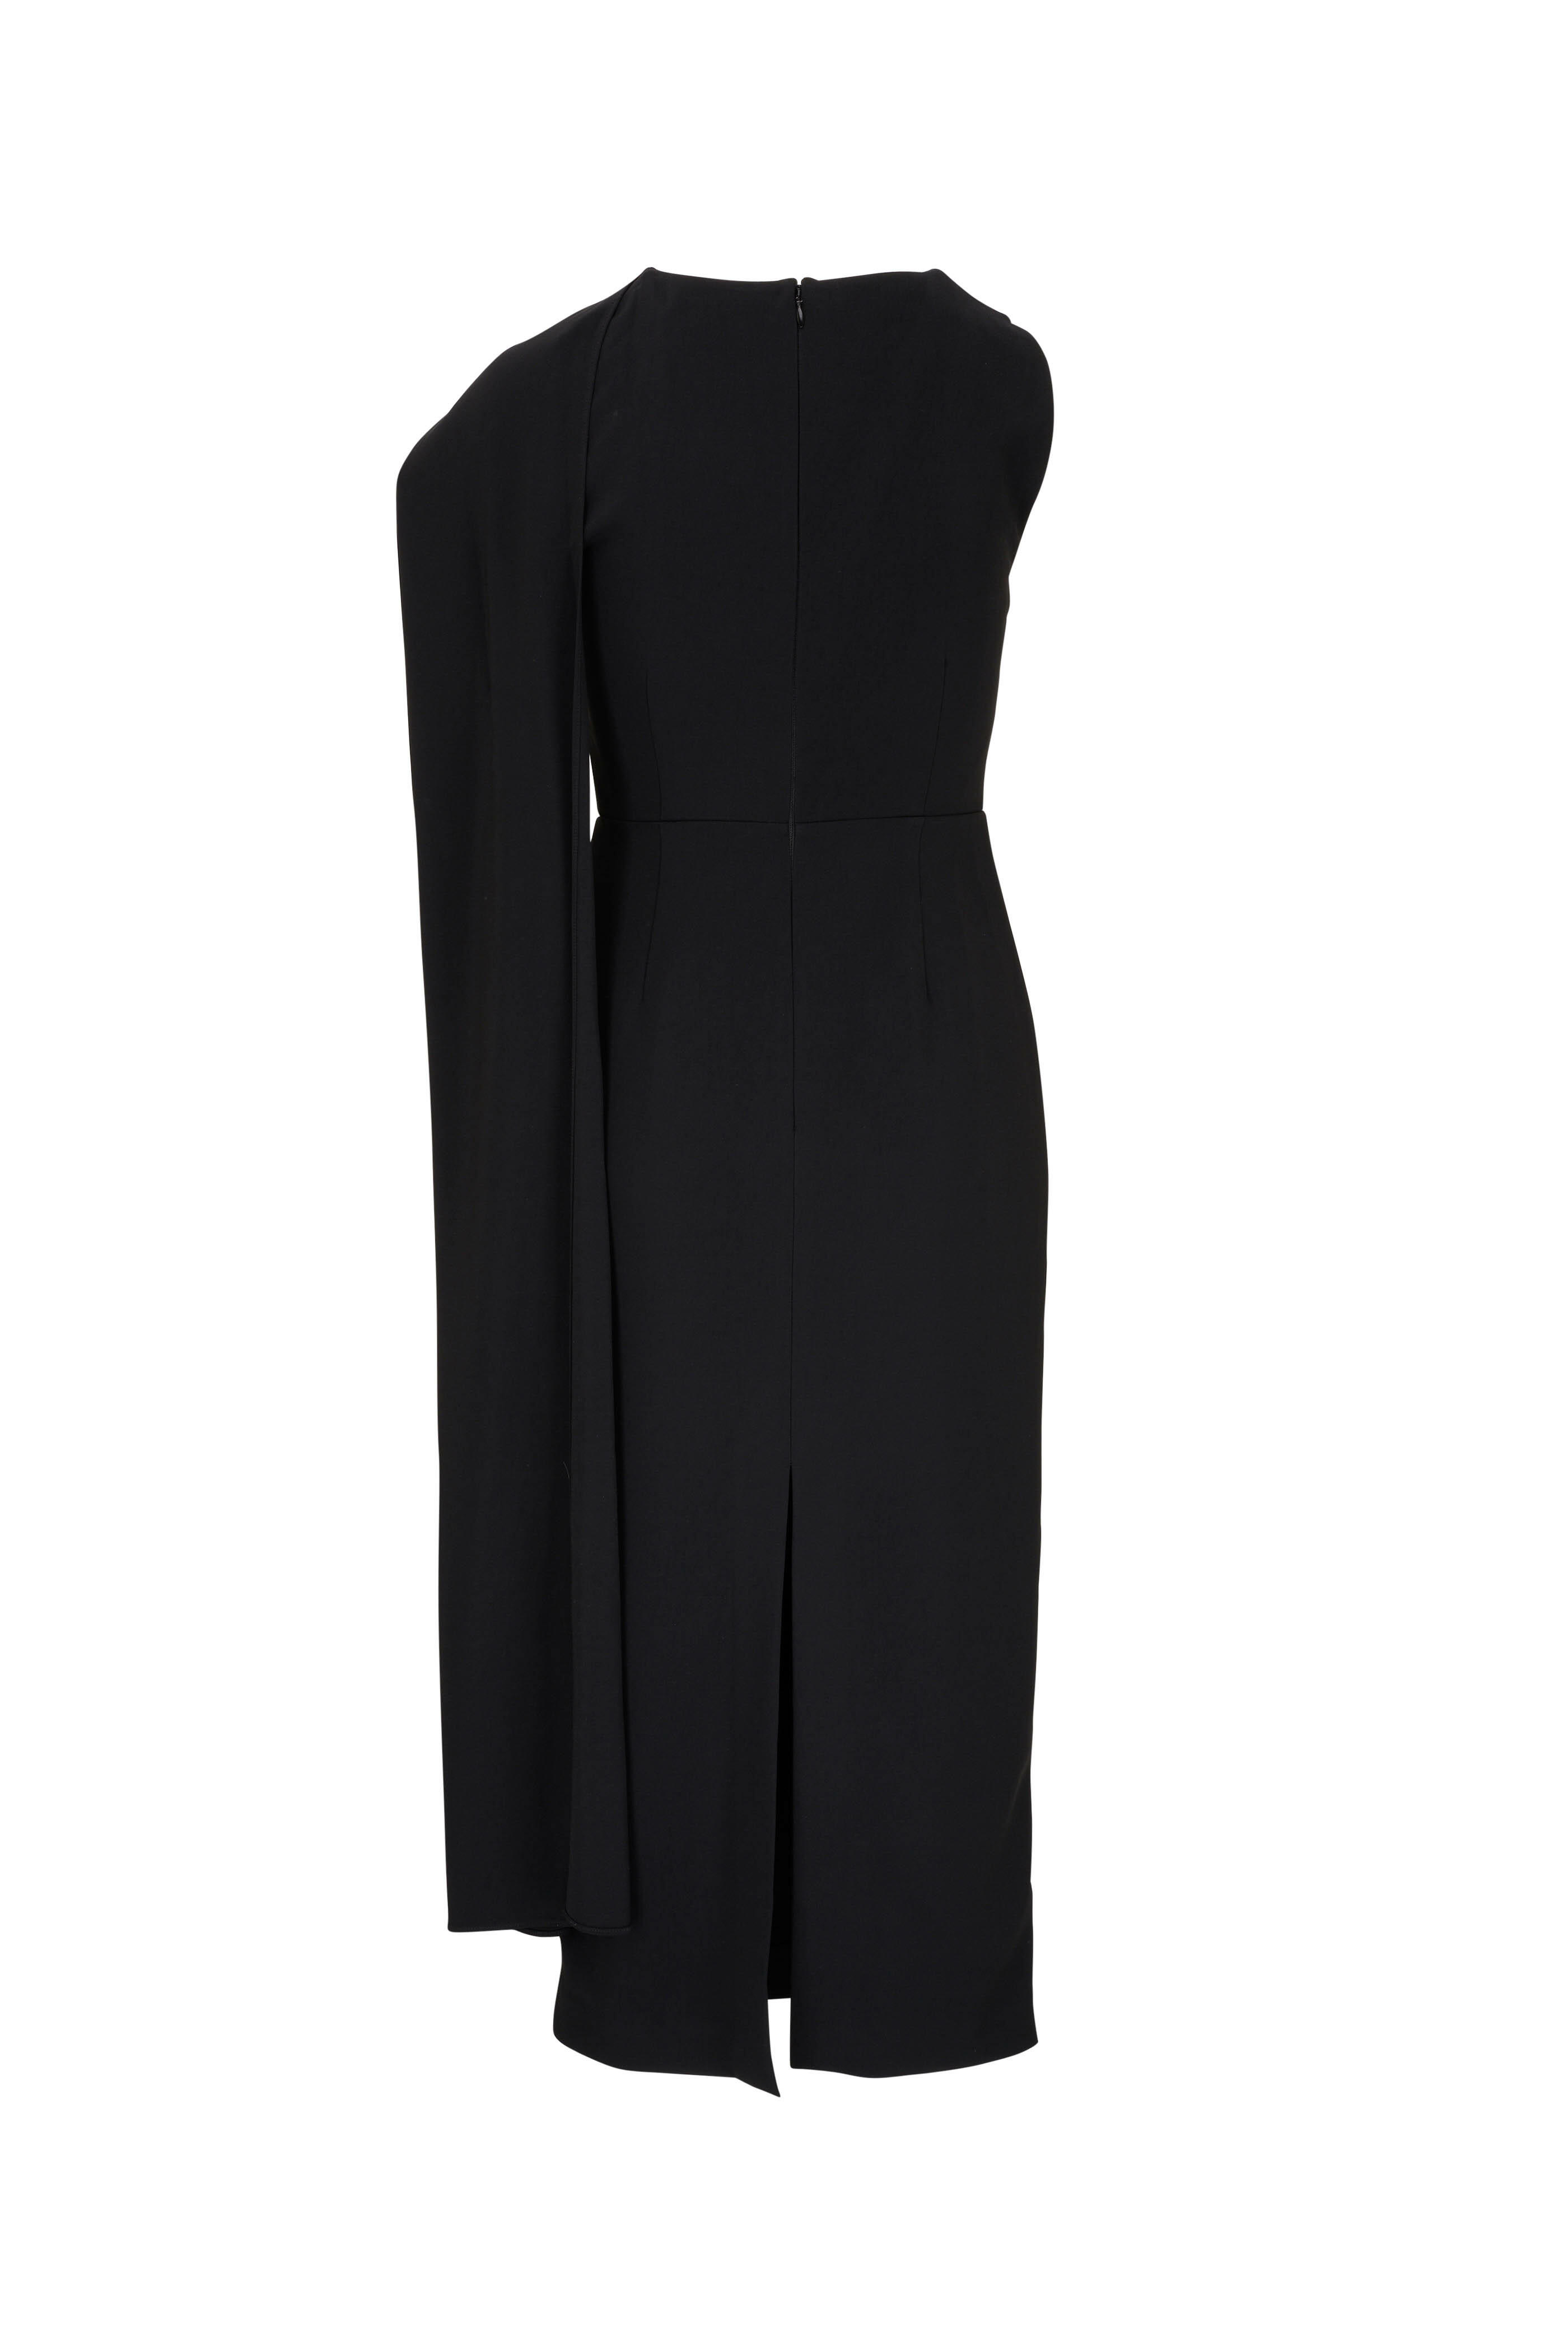 Roland Mouret - Black Asymmetric Stretch Cady Midi Dress